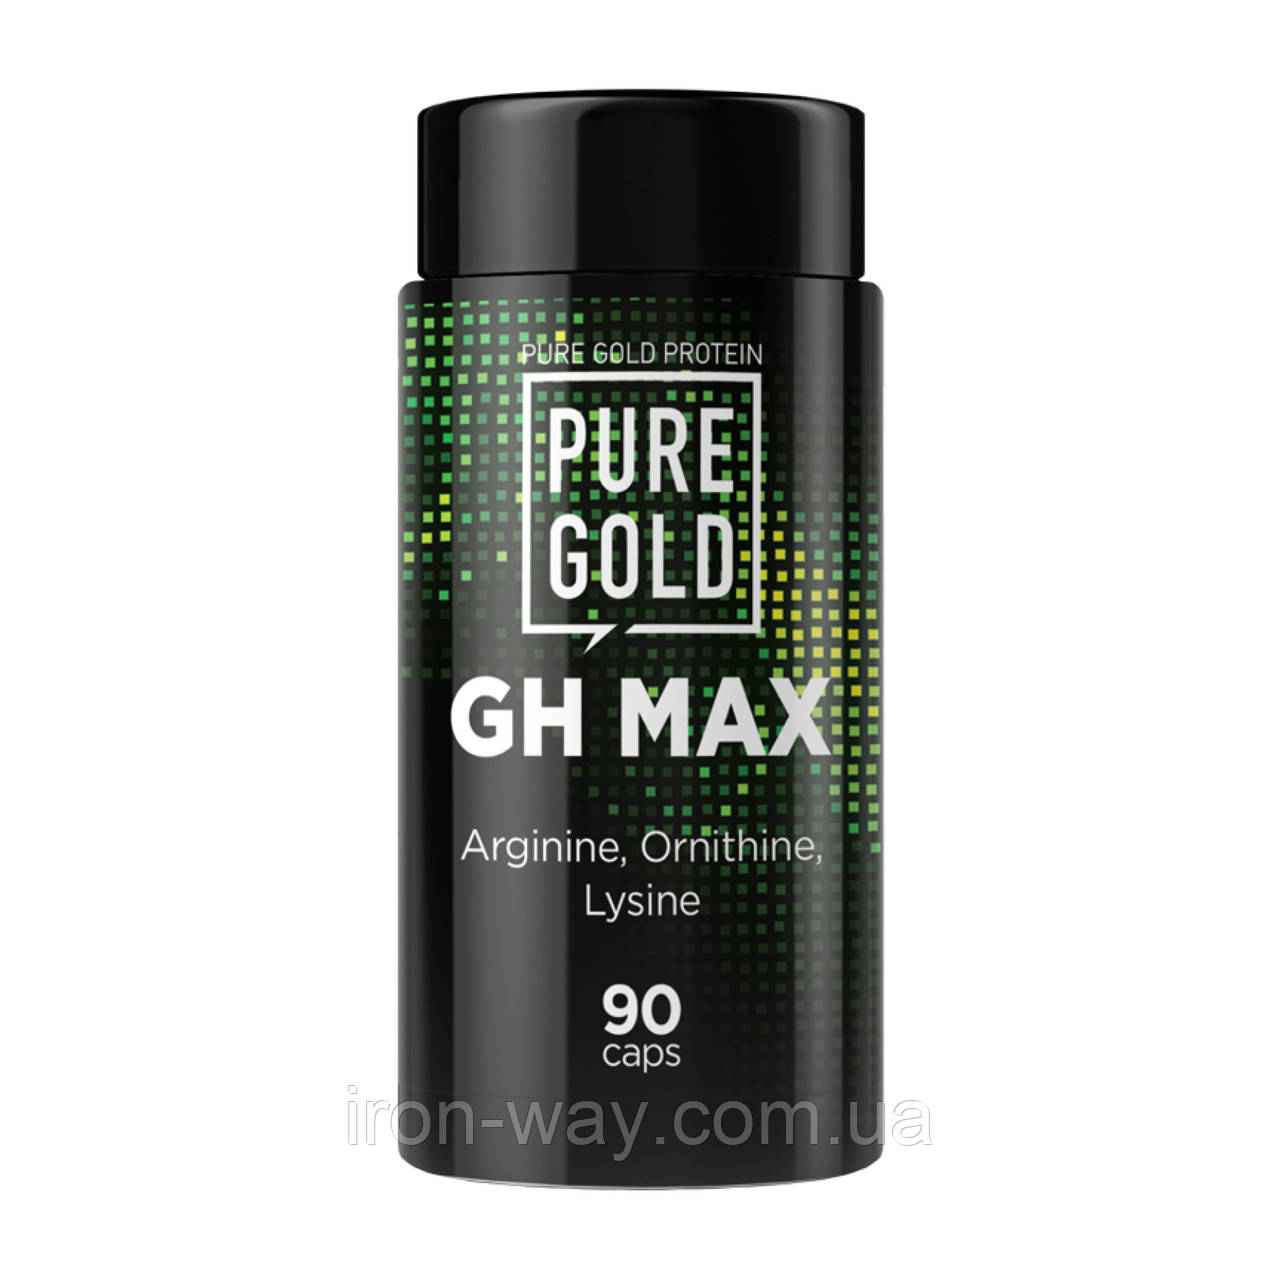 Pure Gold GH Max - 90caps